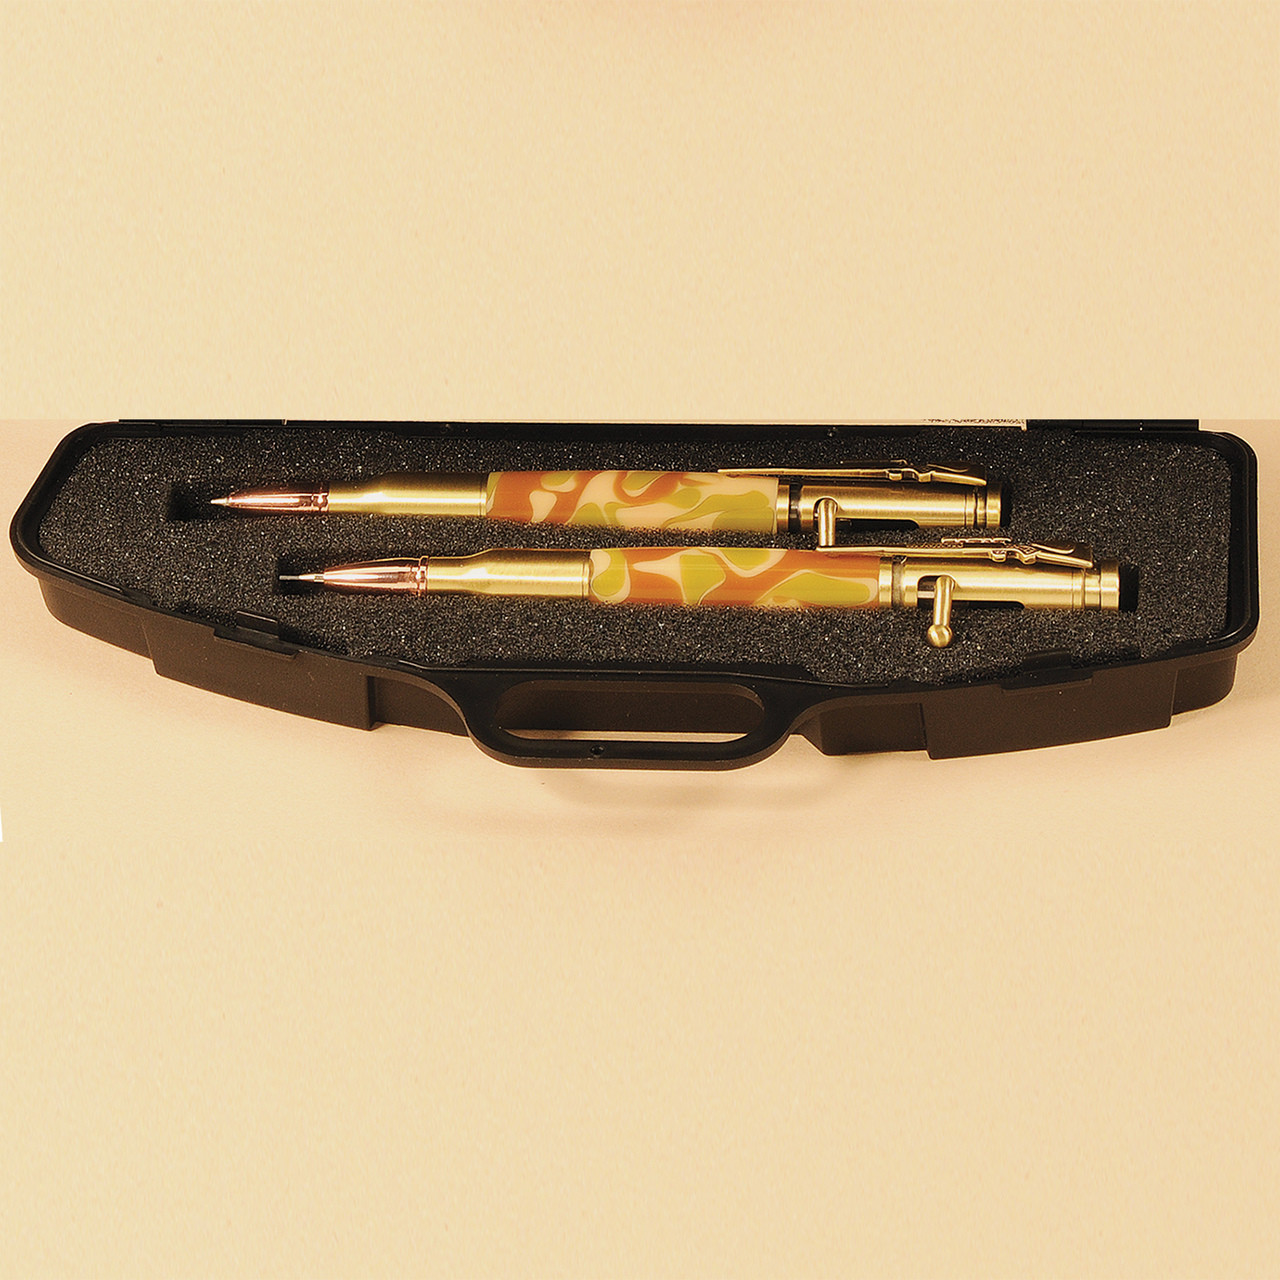 PKBOXGUNX Rifle Case Pen Box Extra Foam Insert to Fit 2 Pens: Pack of 2